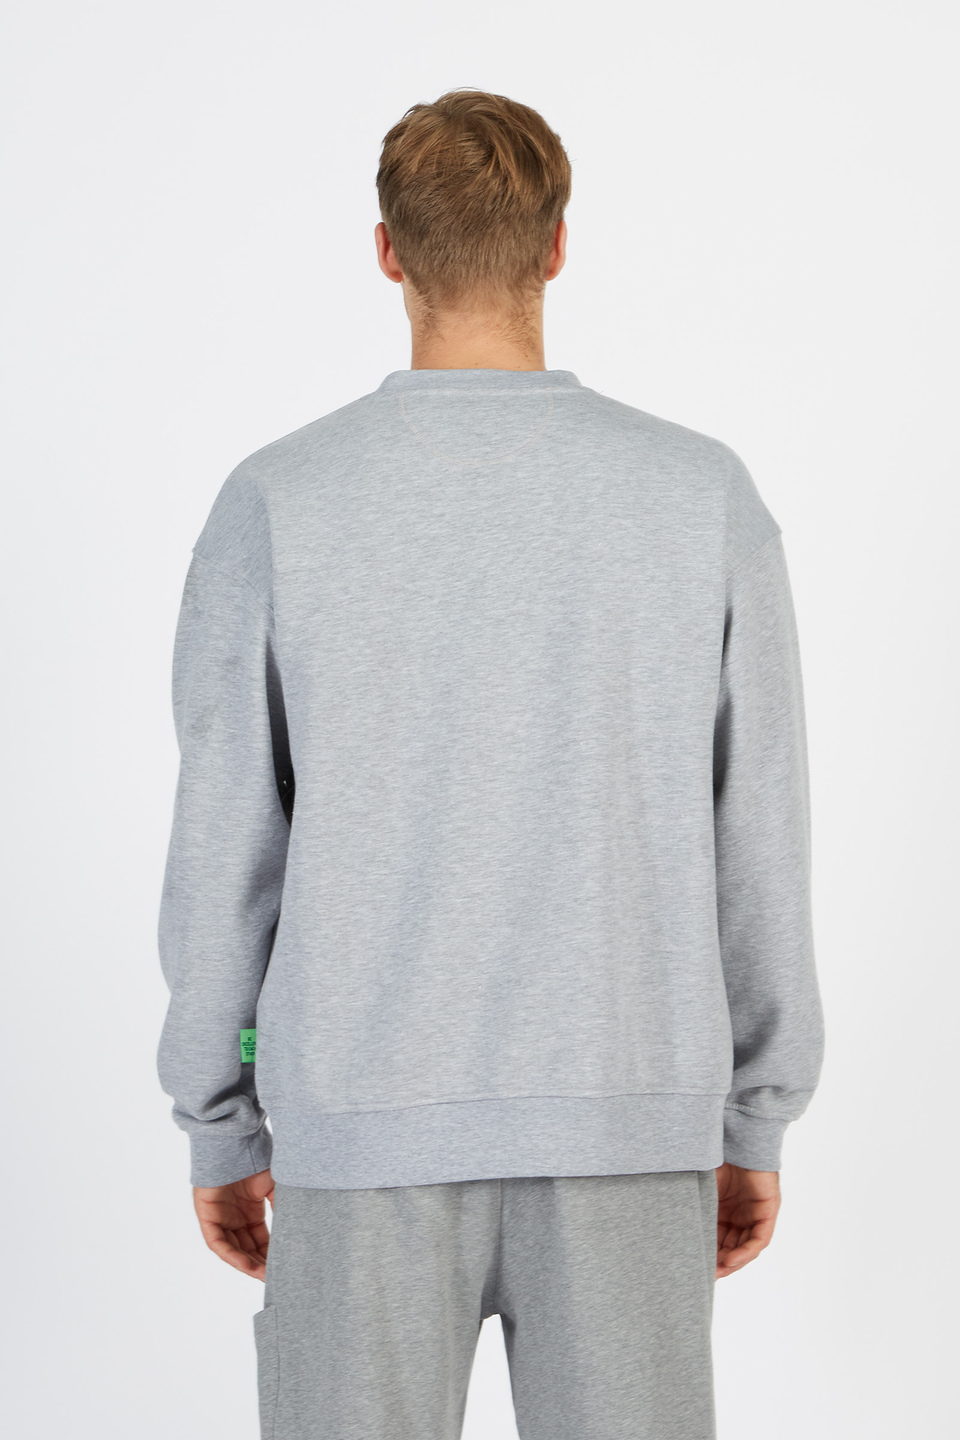 Men's oversized long-sleeved cotton blend sweatshirt | La Martina - Official Online Shop